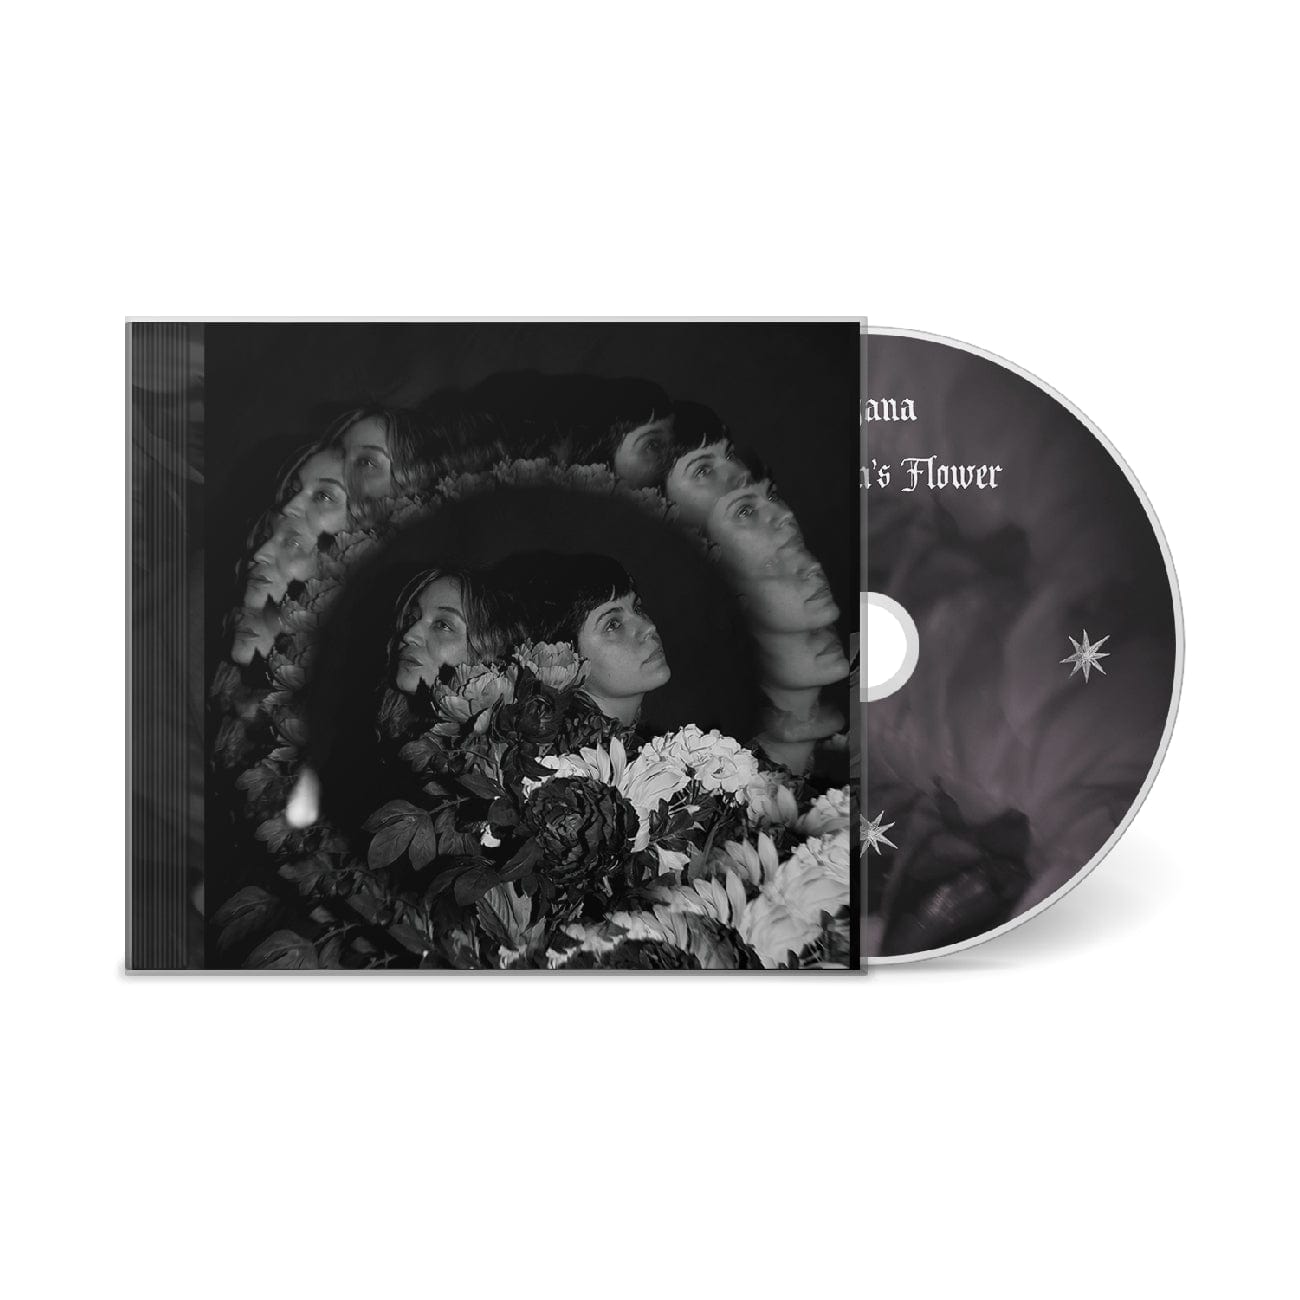 The Flenser CD Ragana "Desolation's Flower" CD (pre-order)